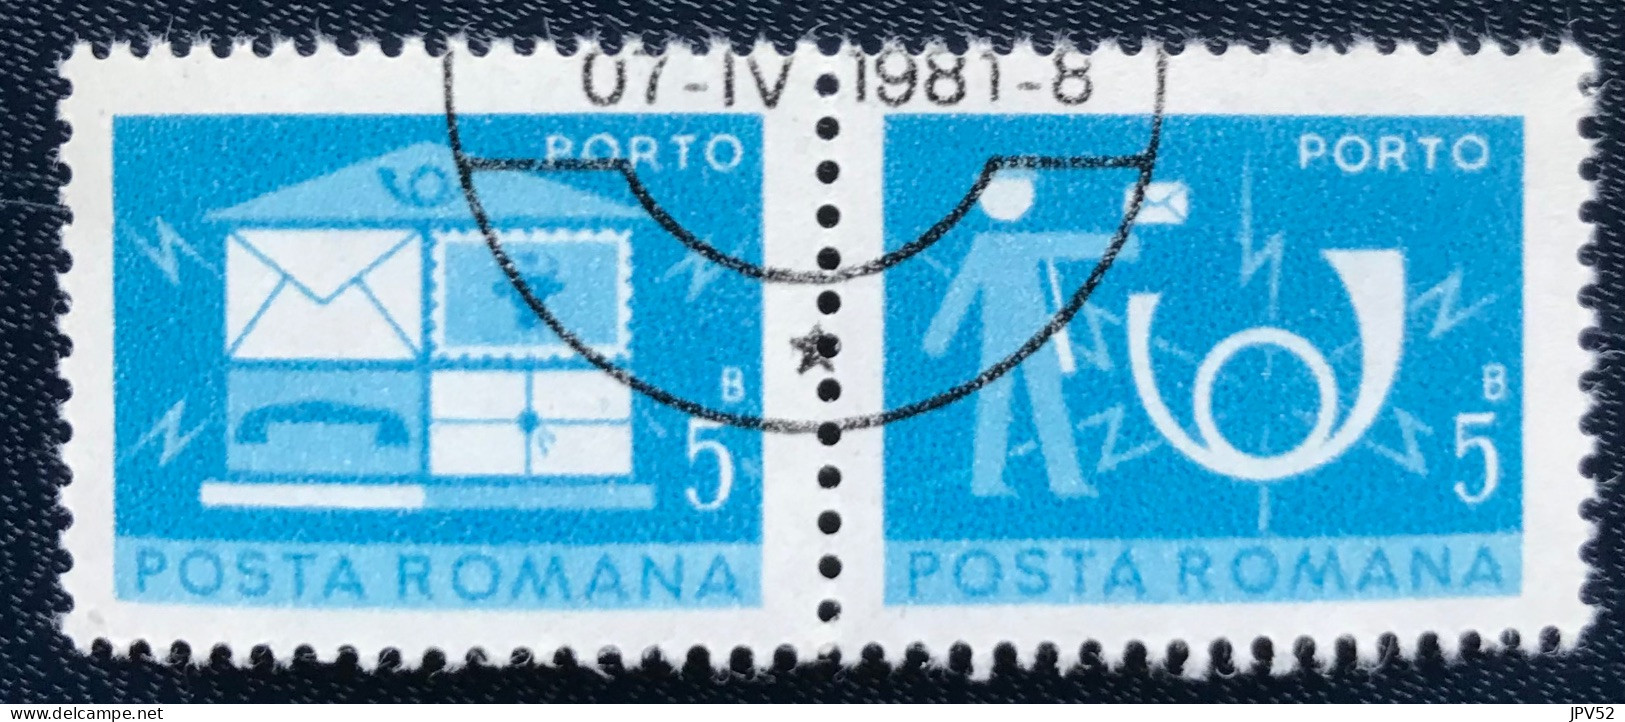 Romana - Roemenië - C14/54 - 1974 - (°)used - Michel 119 - Brievenbus & Postbode & Posthoorn - Postage Due